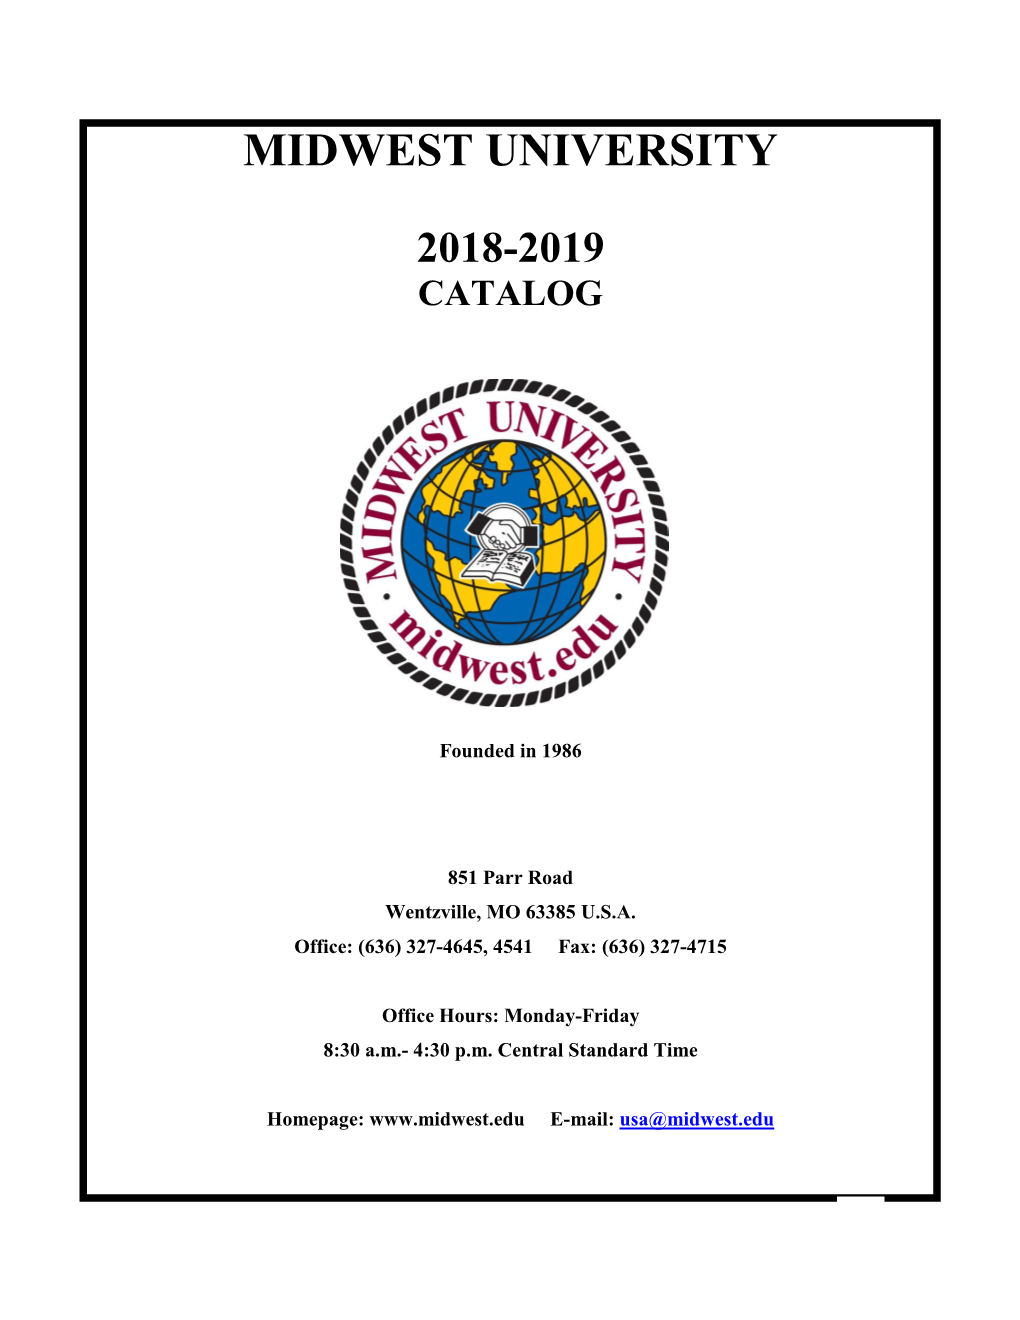 Midwest University 2018-2019 Catalog